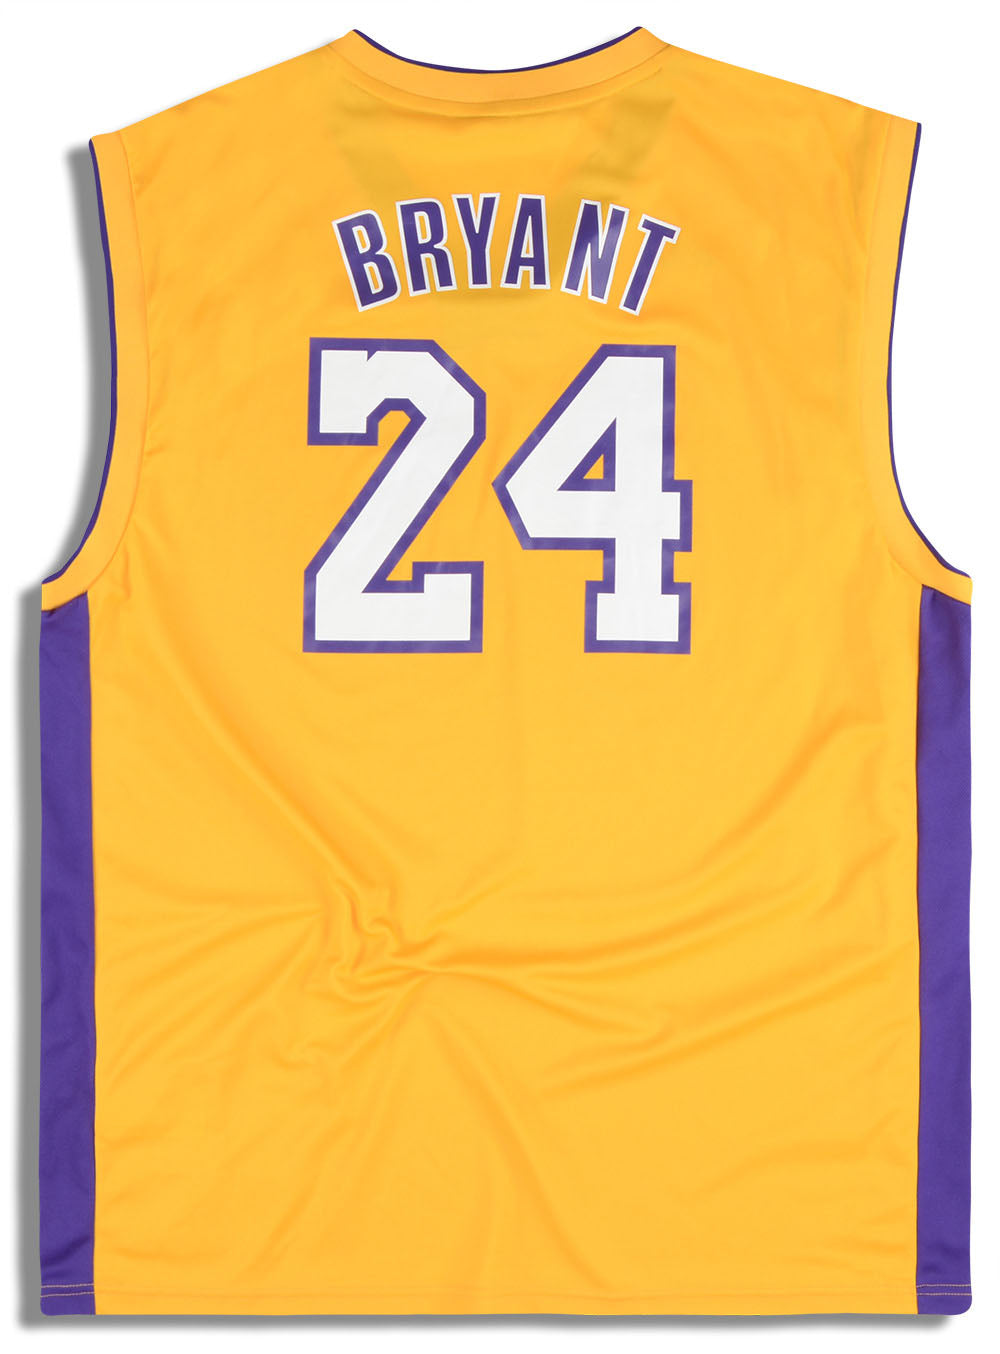 Kobe Bryant Lakers/High School Jersey Men's M/L Retro